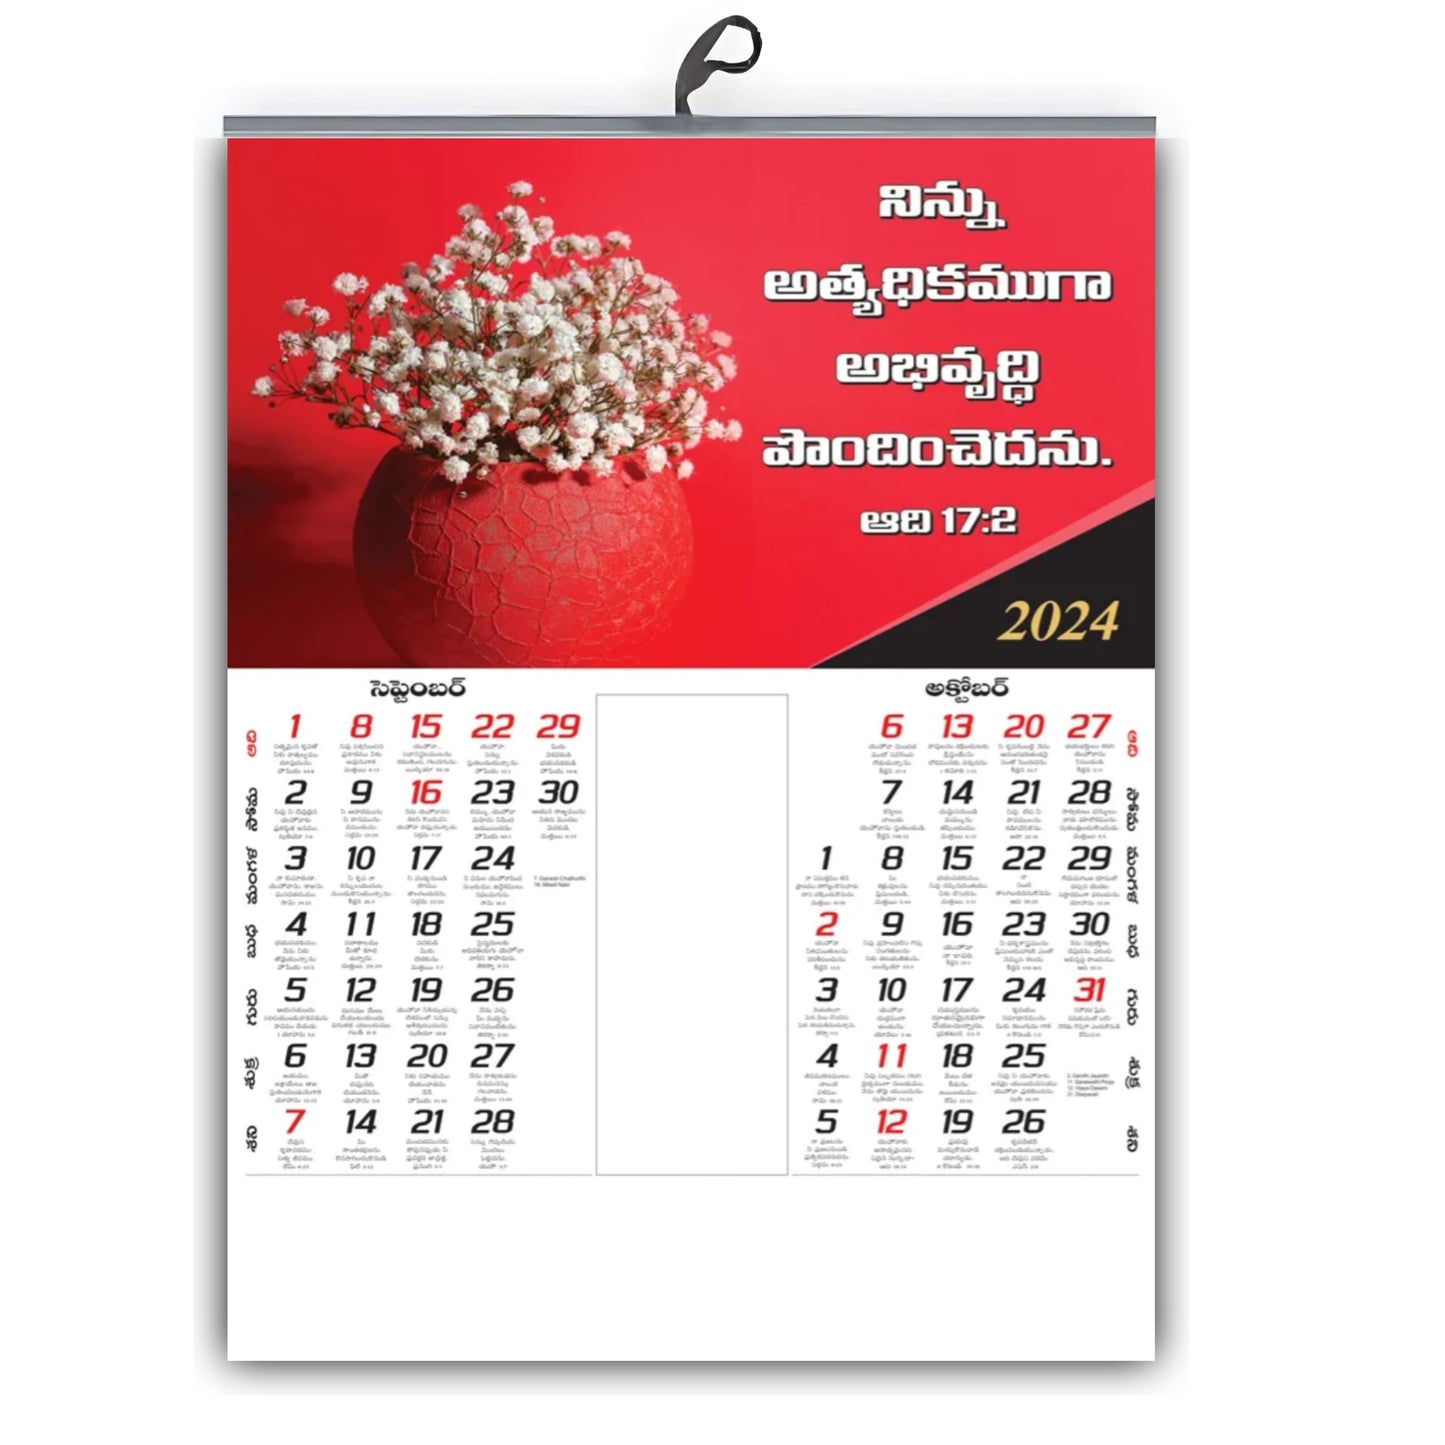 2024 Telugu Bible Verse Wall Calendar - Beautiful Flowers, Bible Promise Words, with Flower & Baby Design